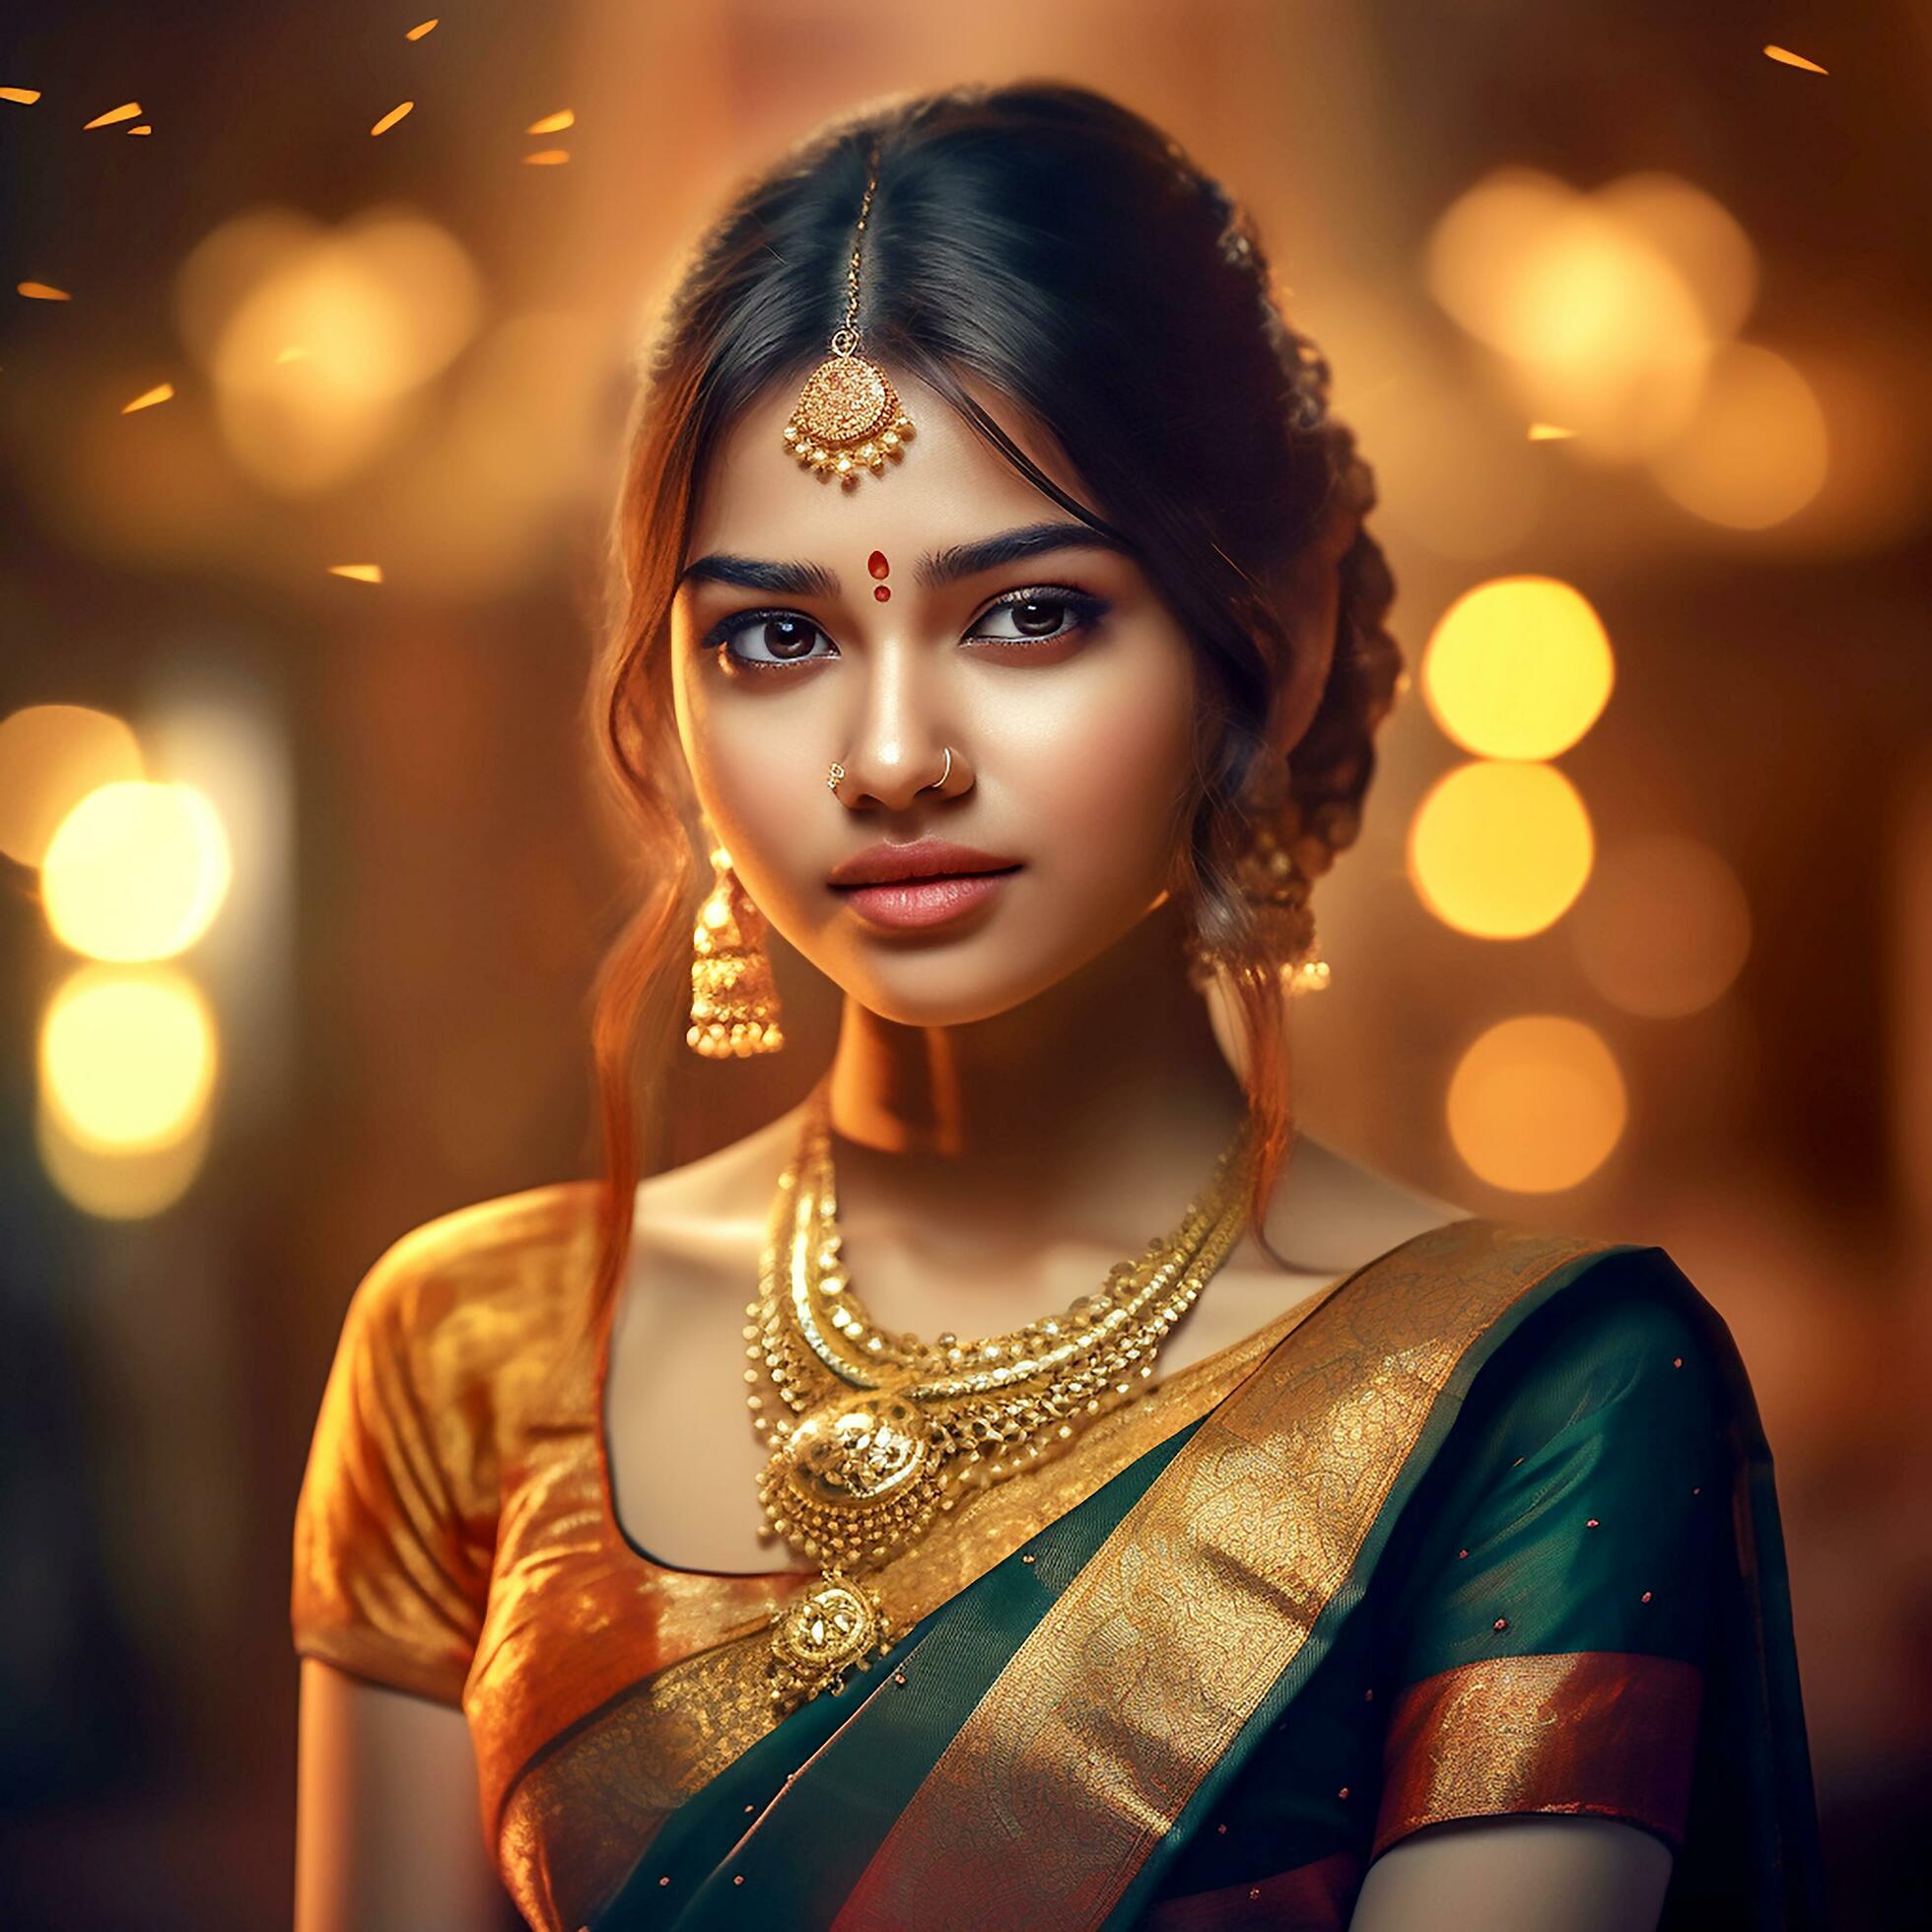 Premium AI Image  Simple looking Indian girl wearing a saree